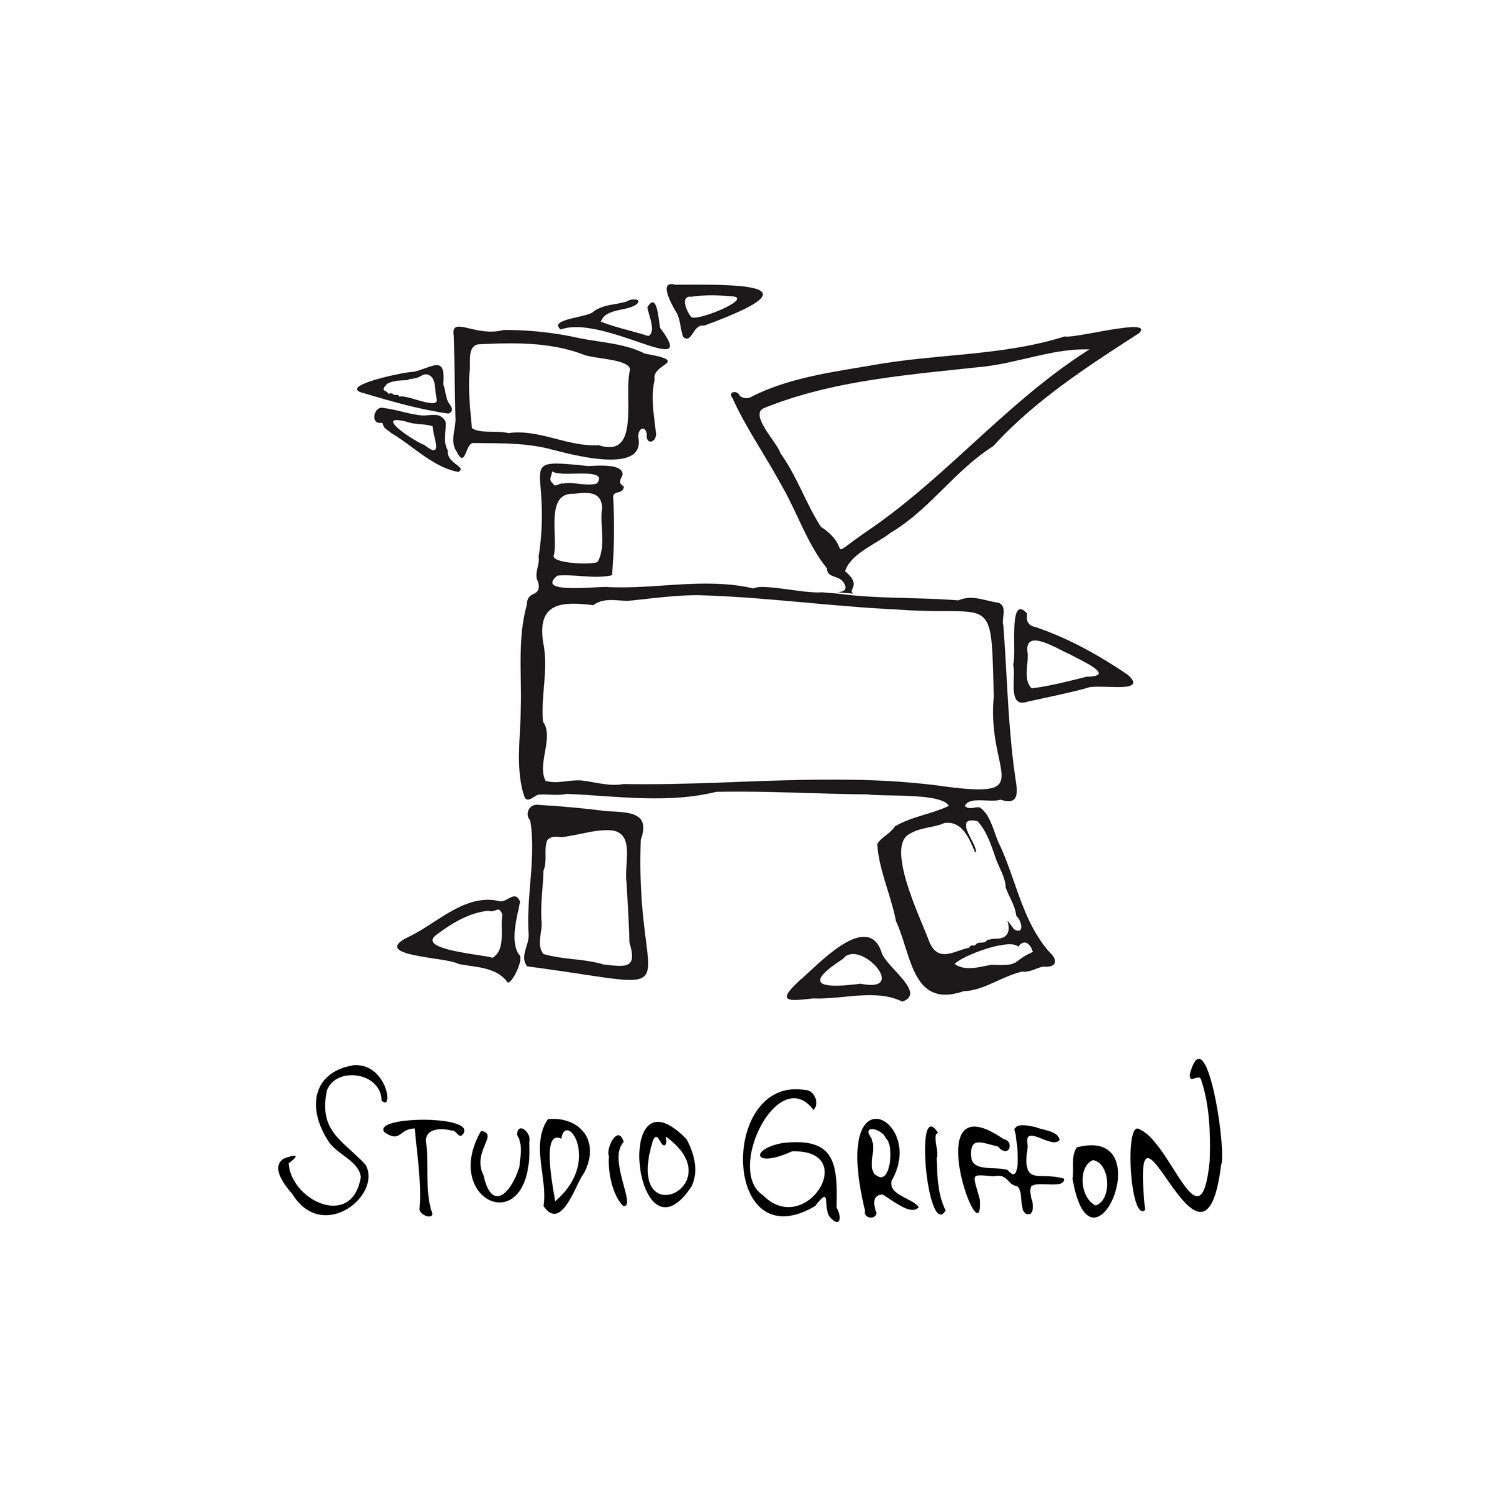 StudioGriffon logo